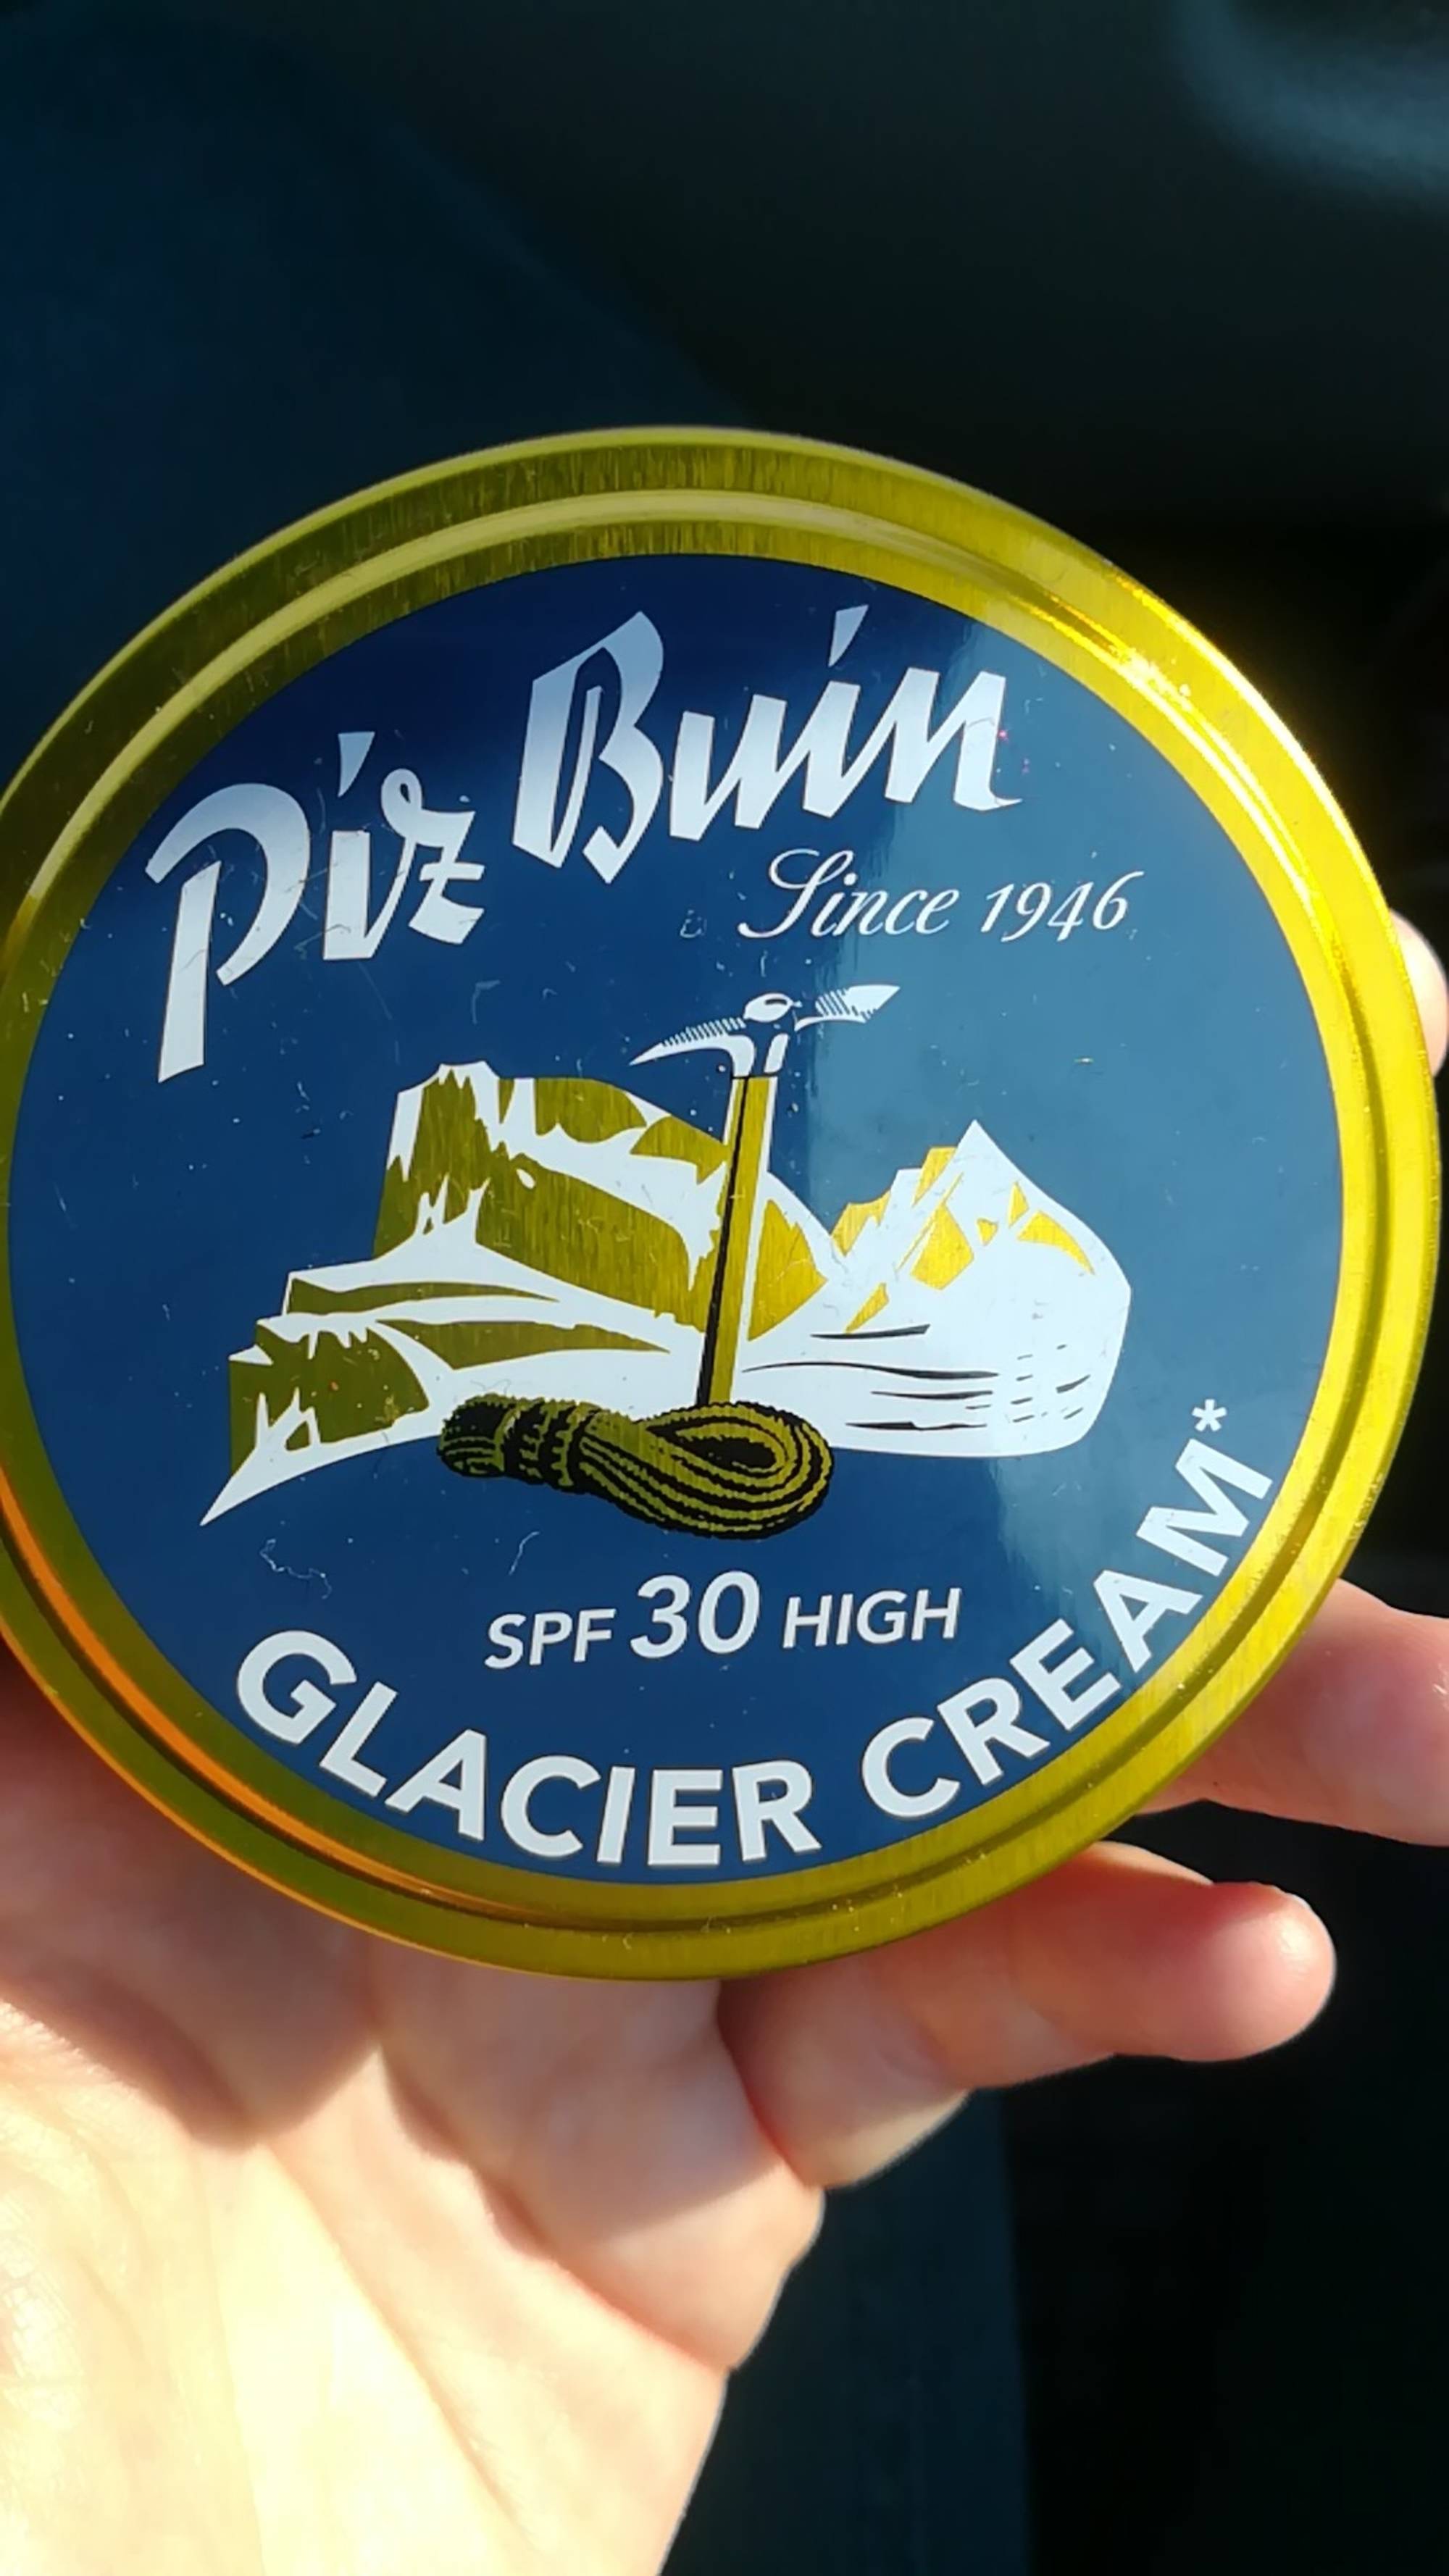 PIZ BUIN - Glacier cream - SPF 30 high